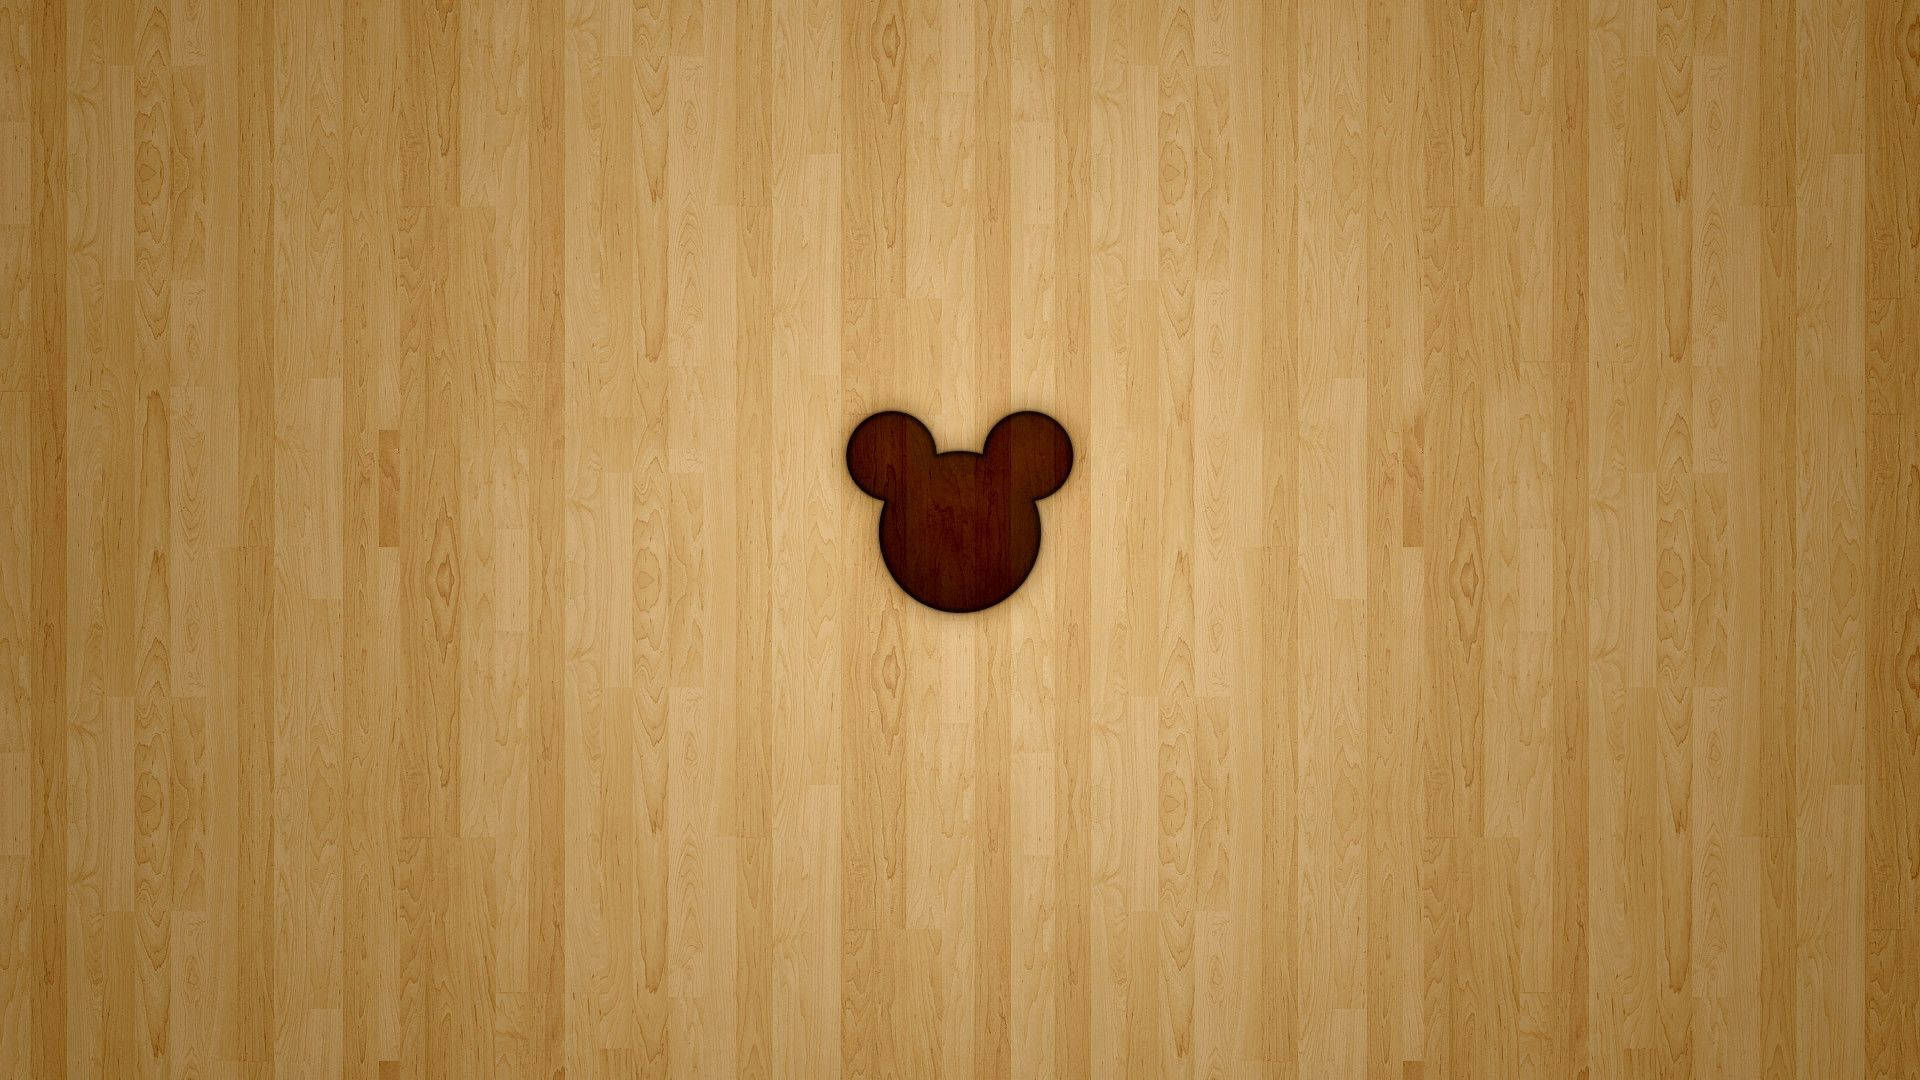 Disney 1920x1080 Hd Mickey Mouse Logo On Wood